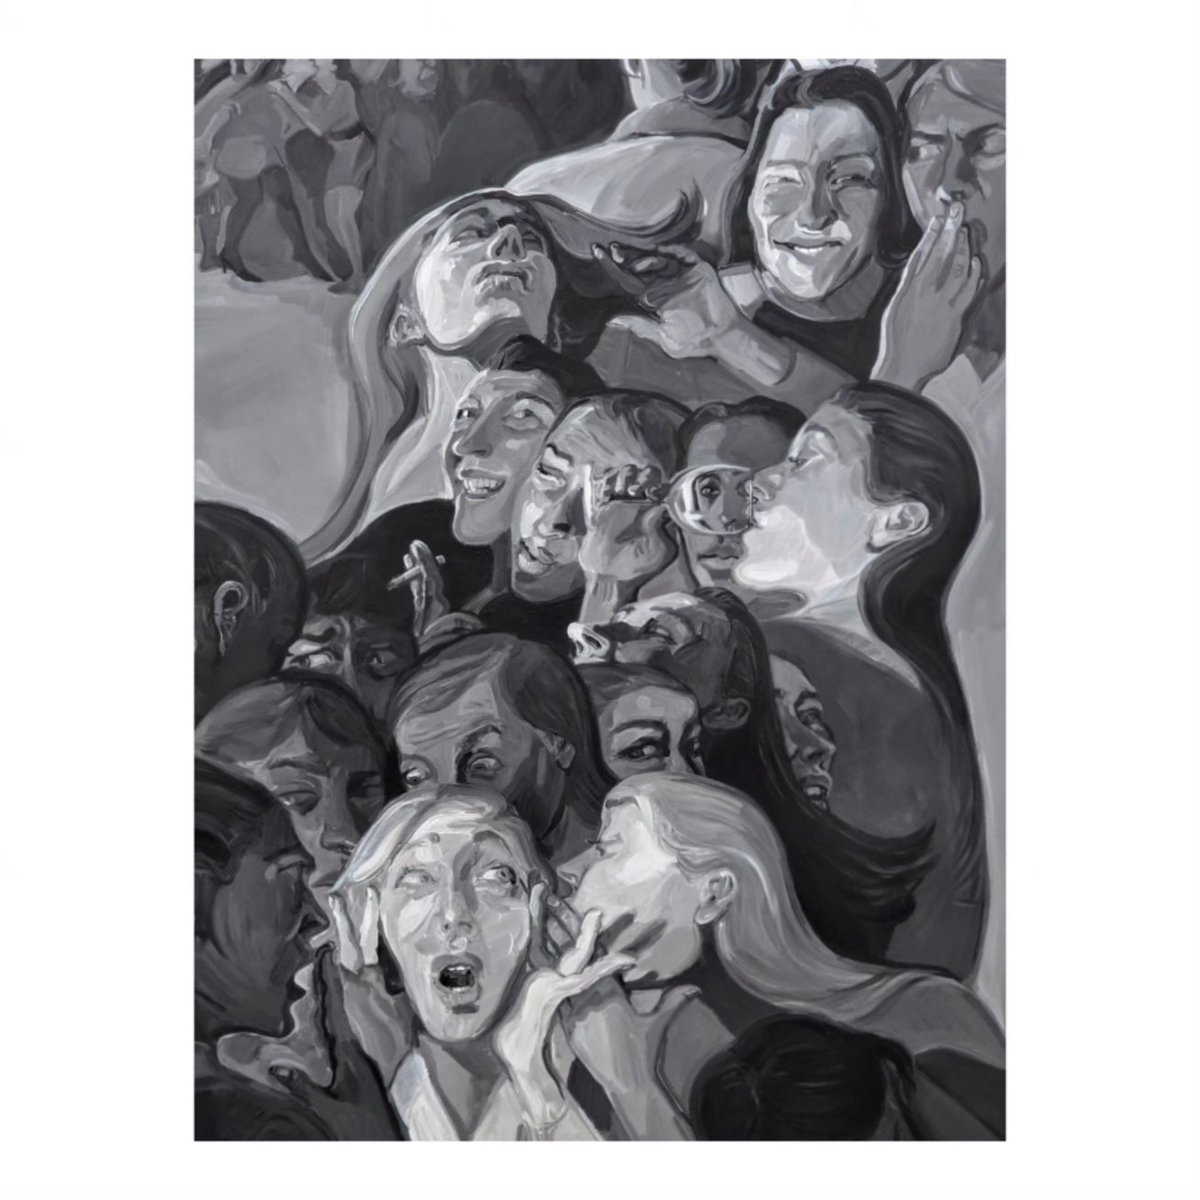 ♥️..Emotion painted onto every surface..❤️
Artist: Vanessa Garwood
Gallery: PM/AM Gallery 
.
.
#drawings #artlife #artstagram #artdiscover #artist #artgallery #artexhibition #artwork  #artoftheday #artcollector #artcurator
@pm______am